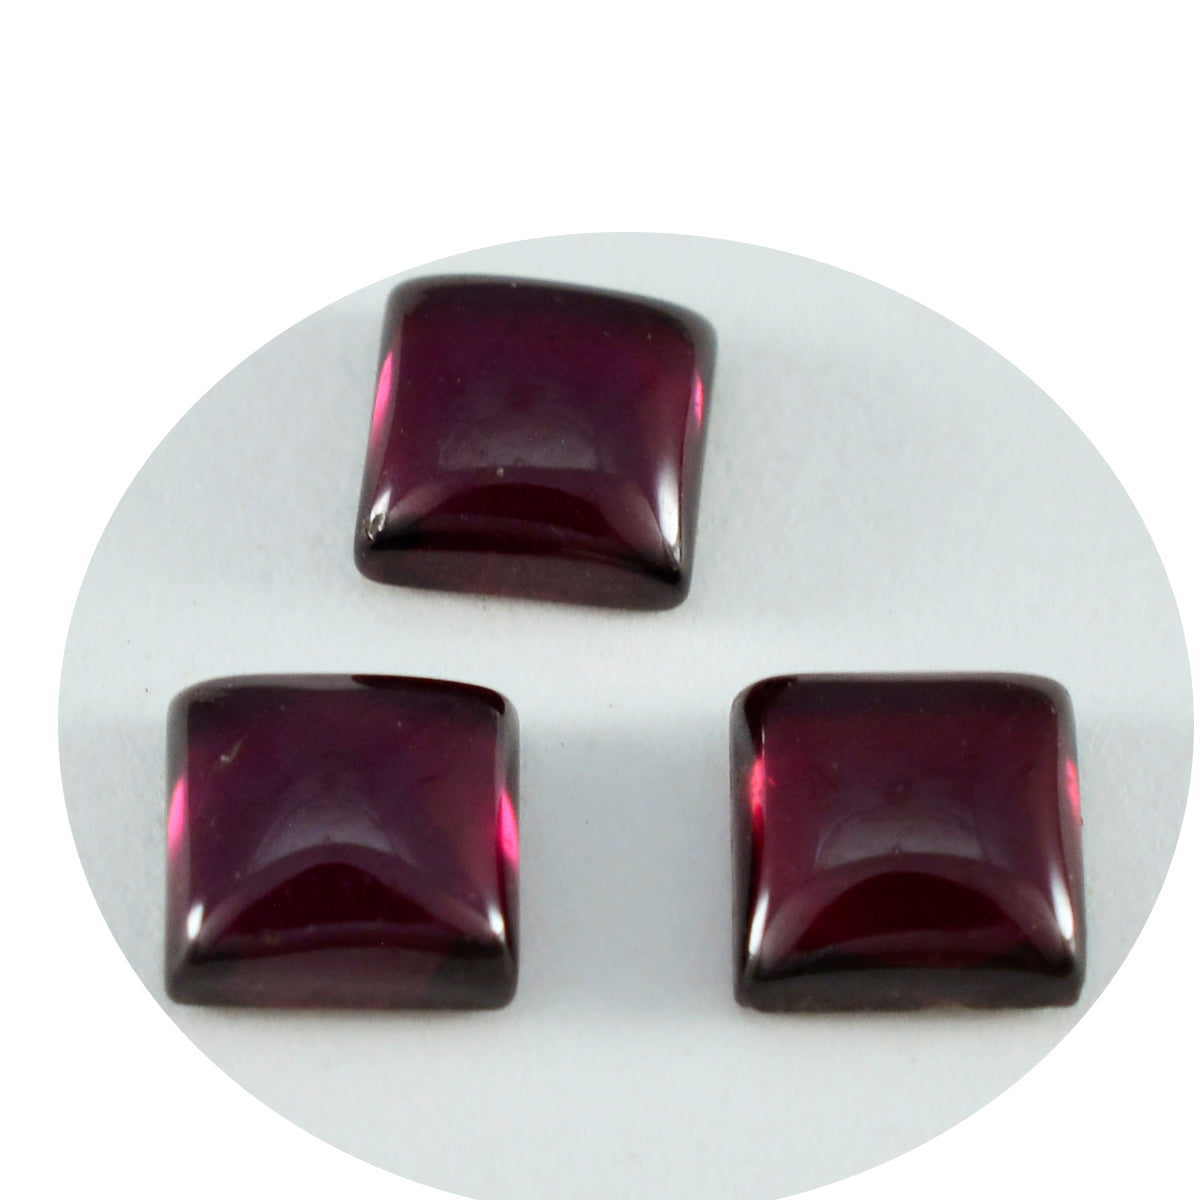 Riyogems 1PC Red Garnet Cabochon 15x15 mm Square Shape wonderful Quality Loose Stone